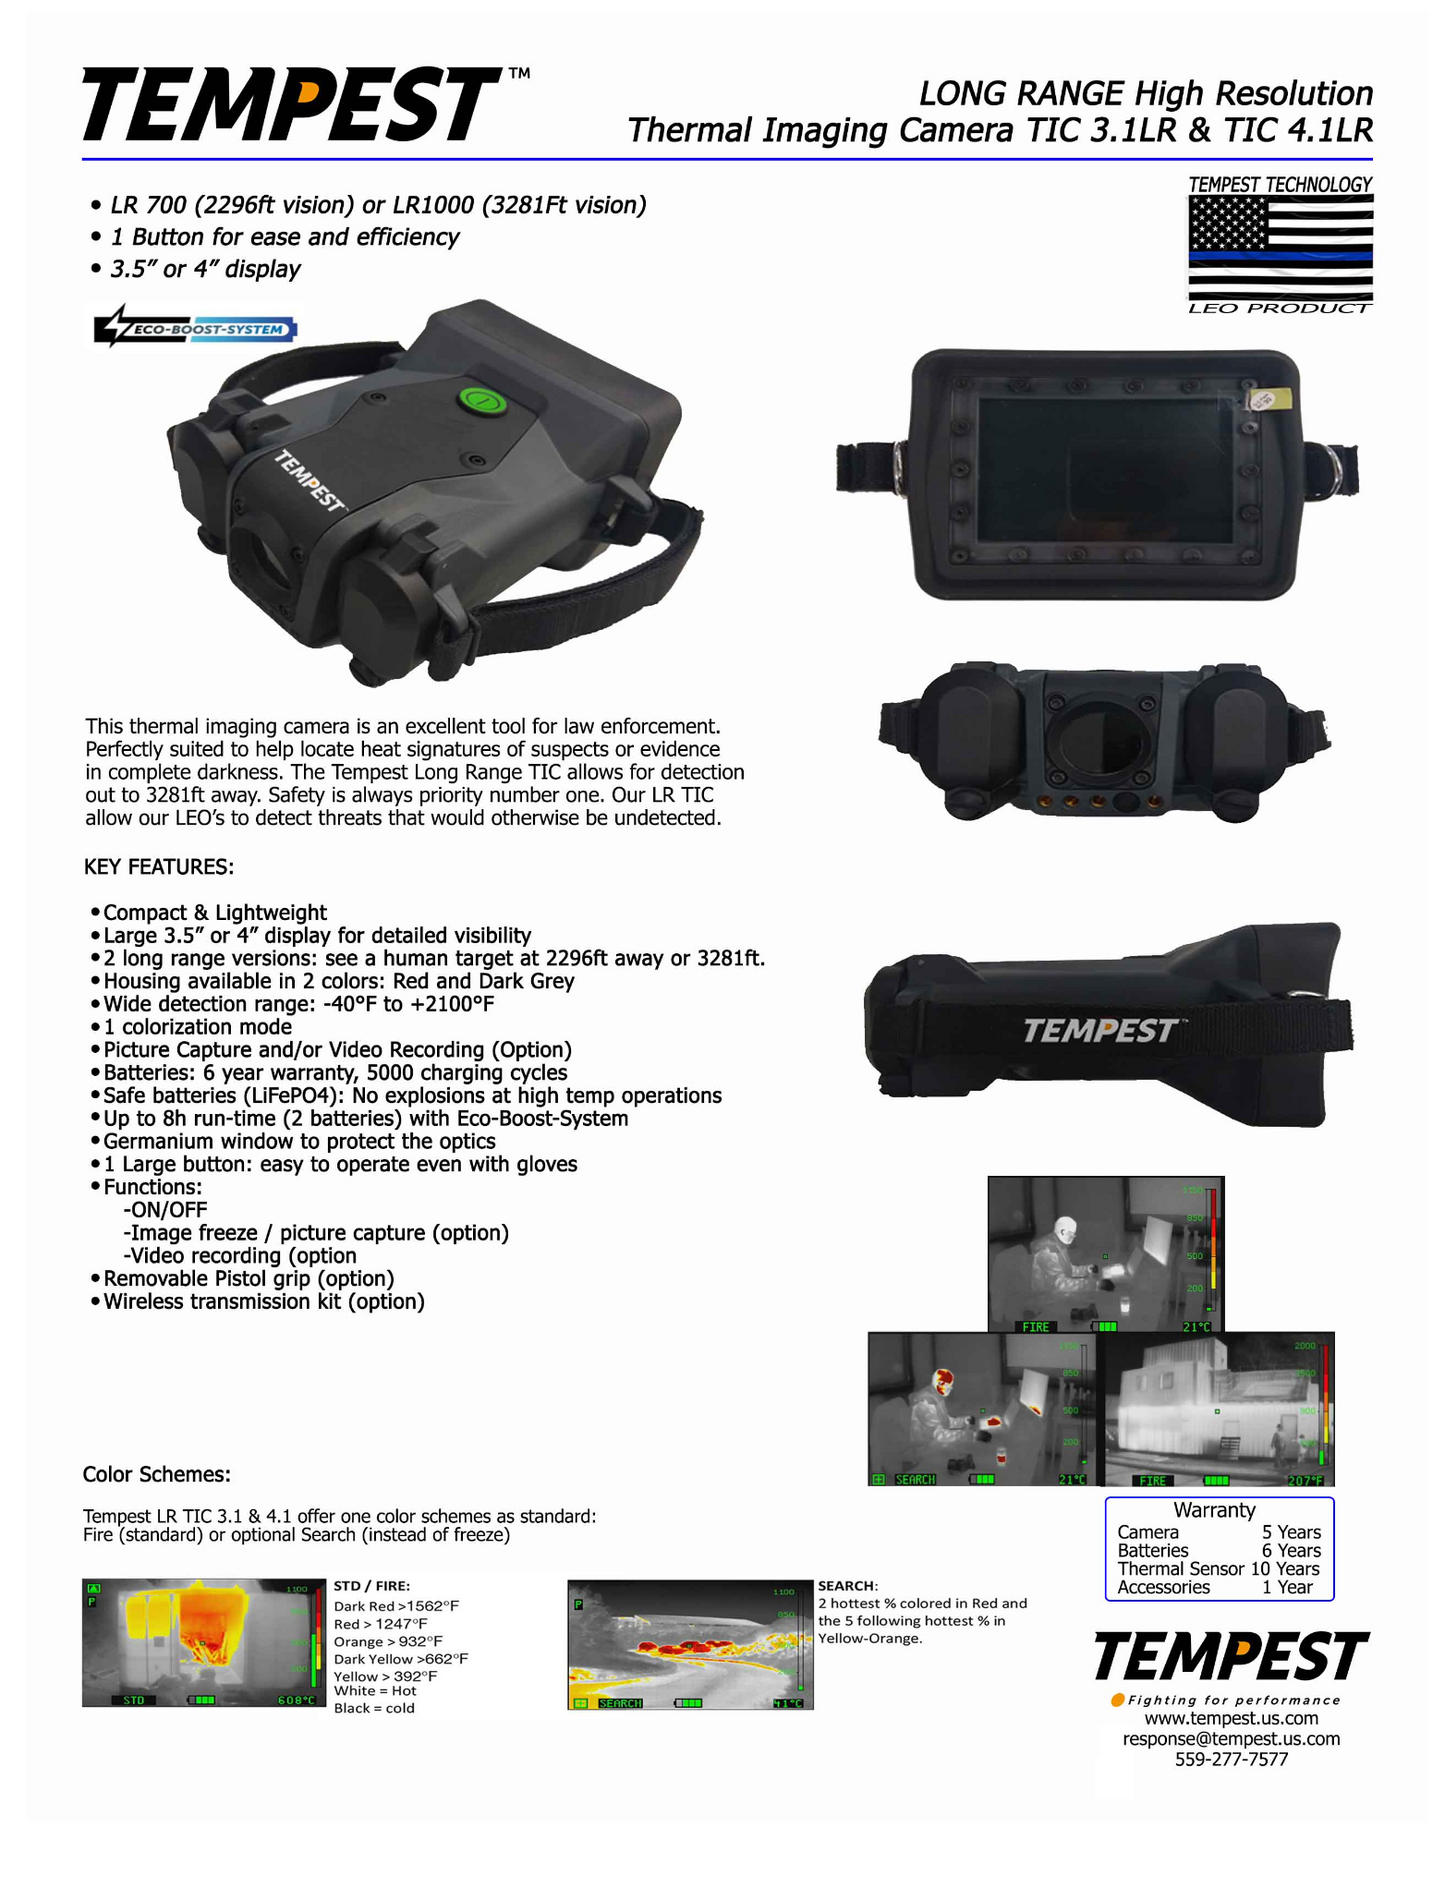 Long Range Thermal Imaging Cameras Tempest TIC 3.1 LR